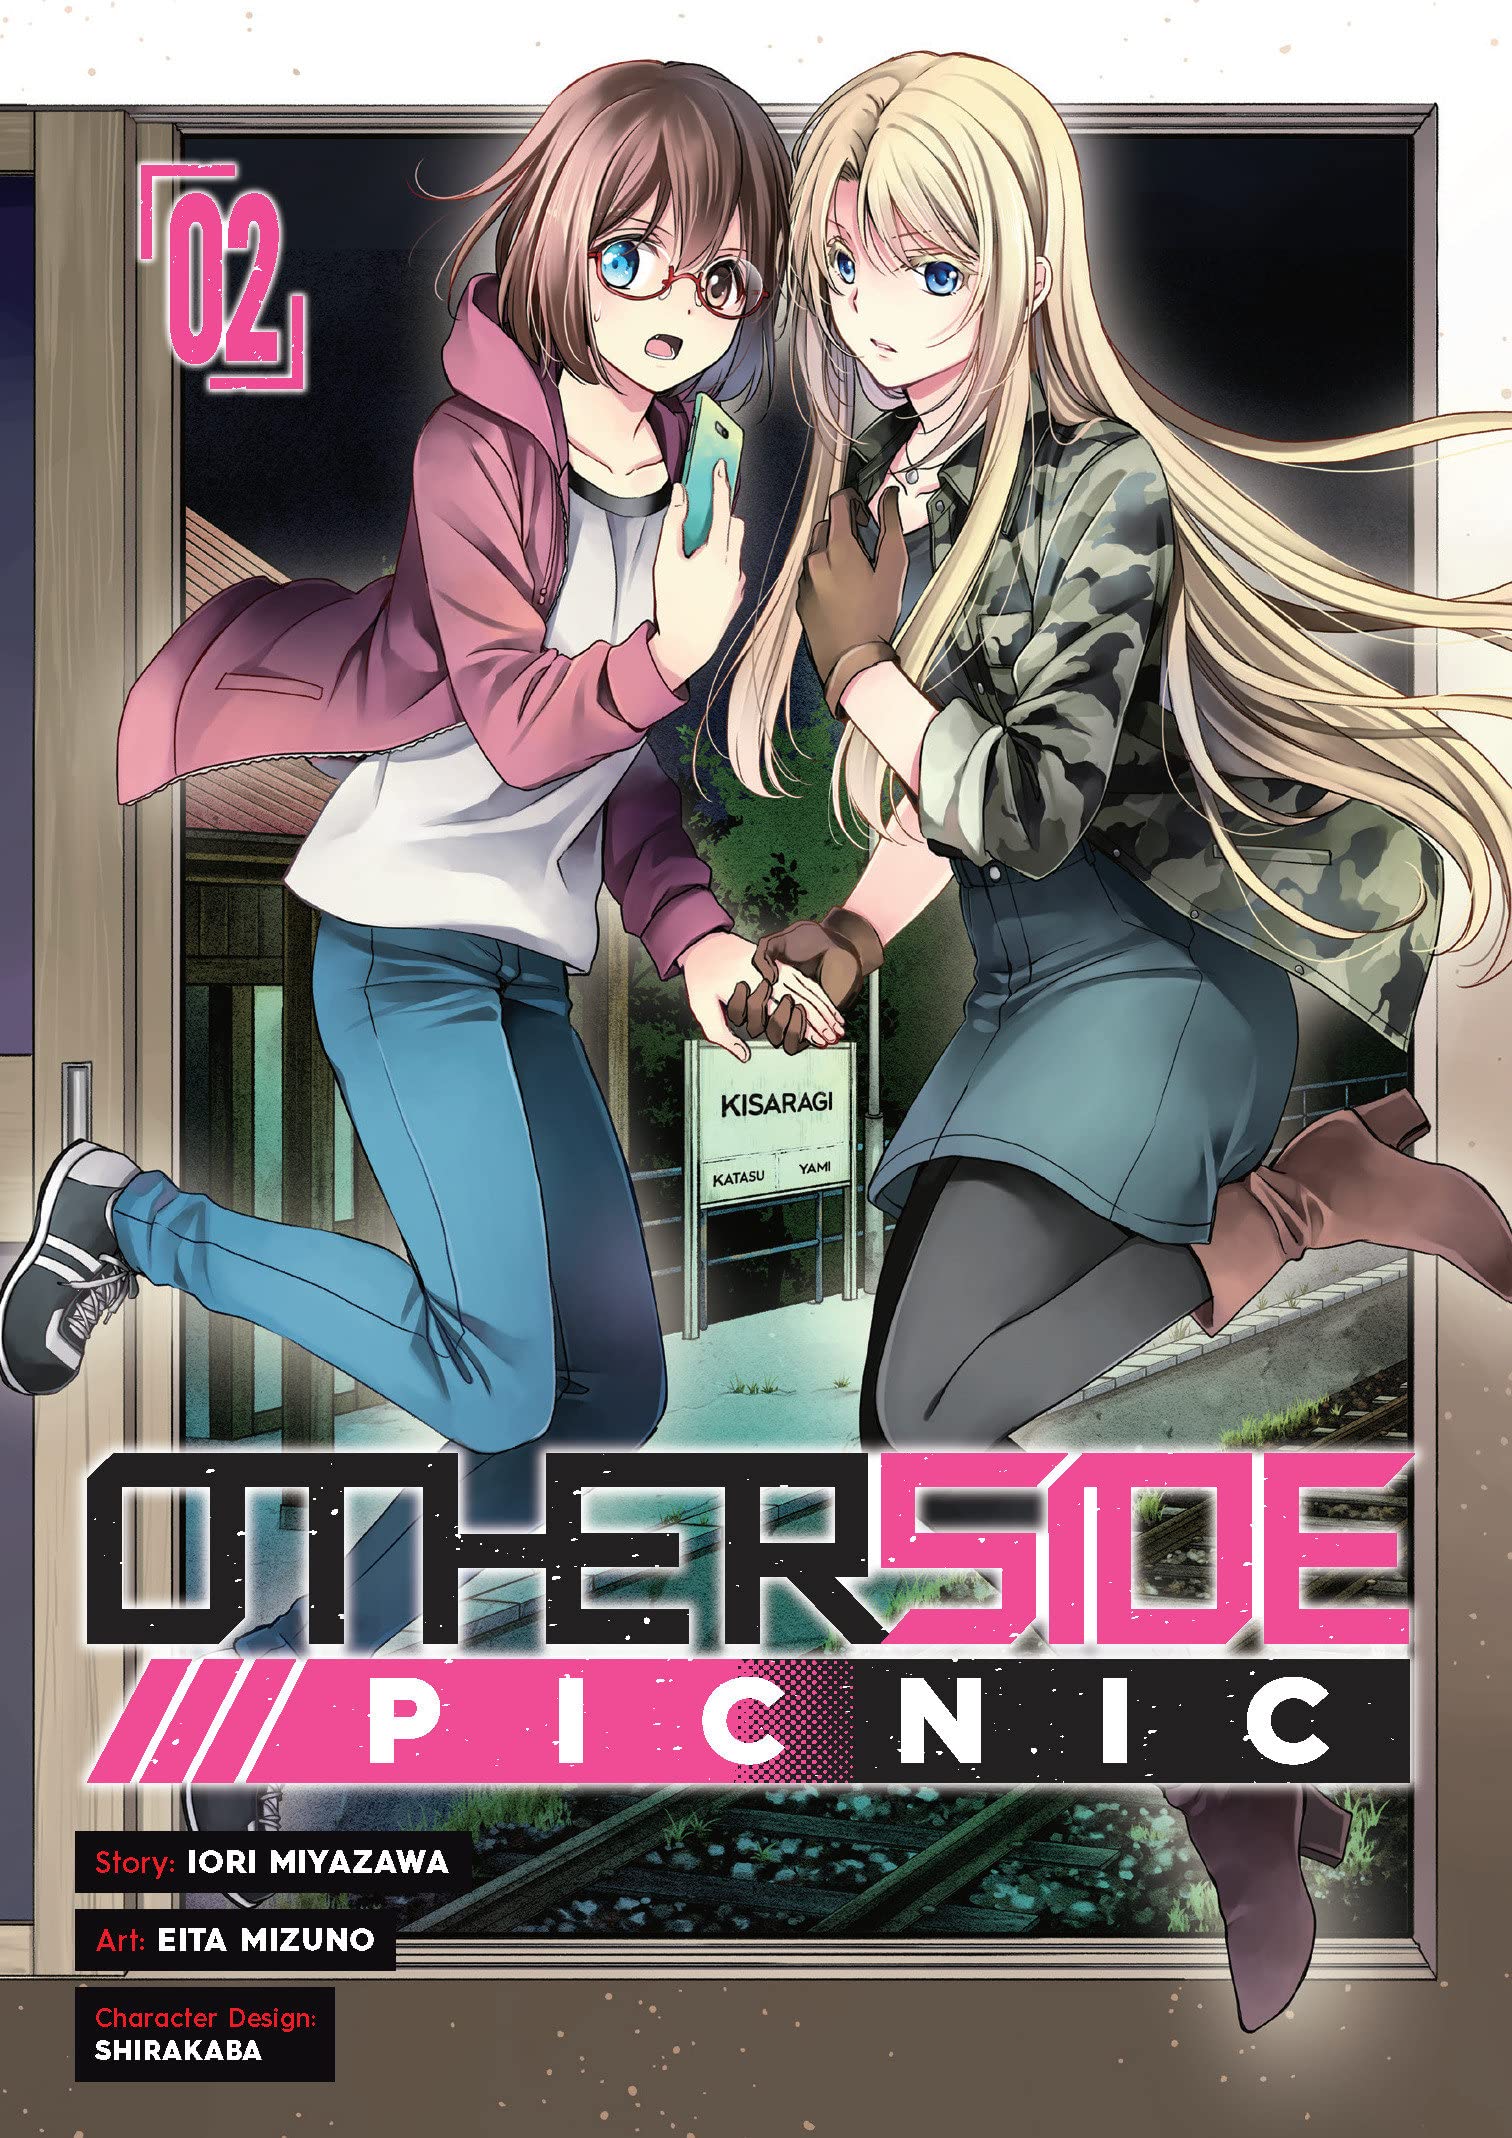 Otherside Picnic Volume 2 Review • Anime UK News